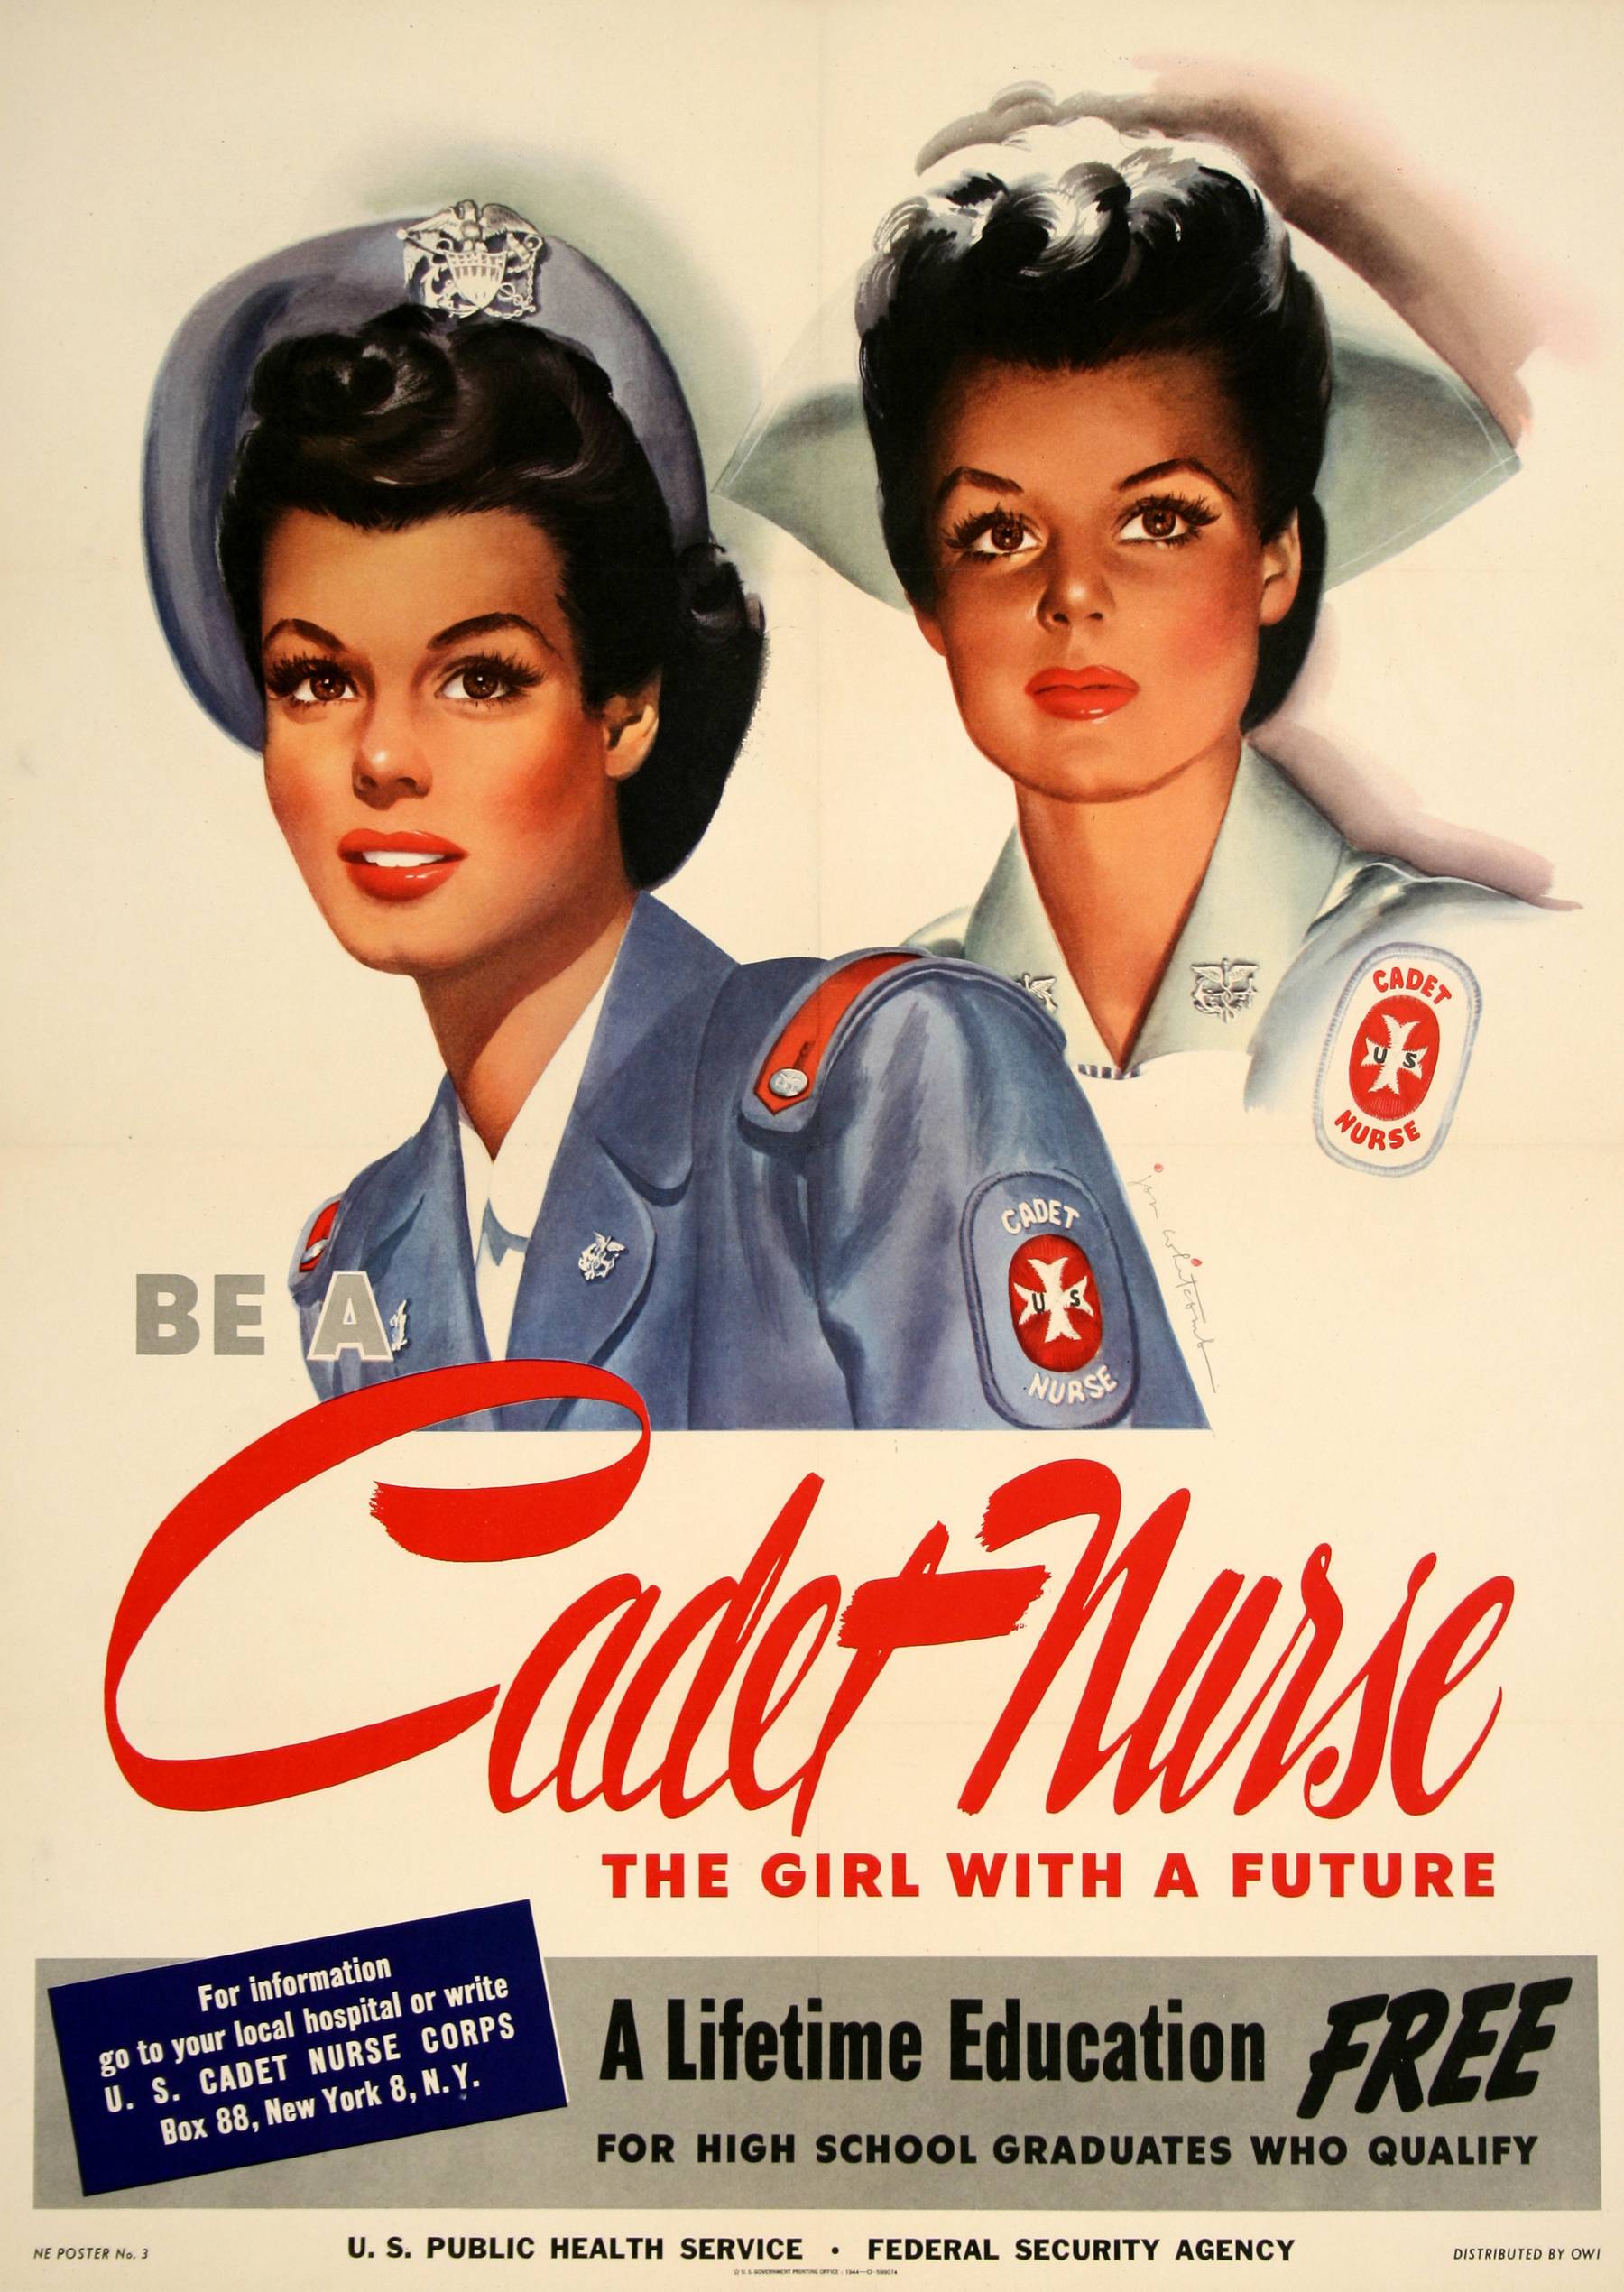 nursing posters